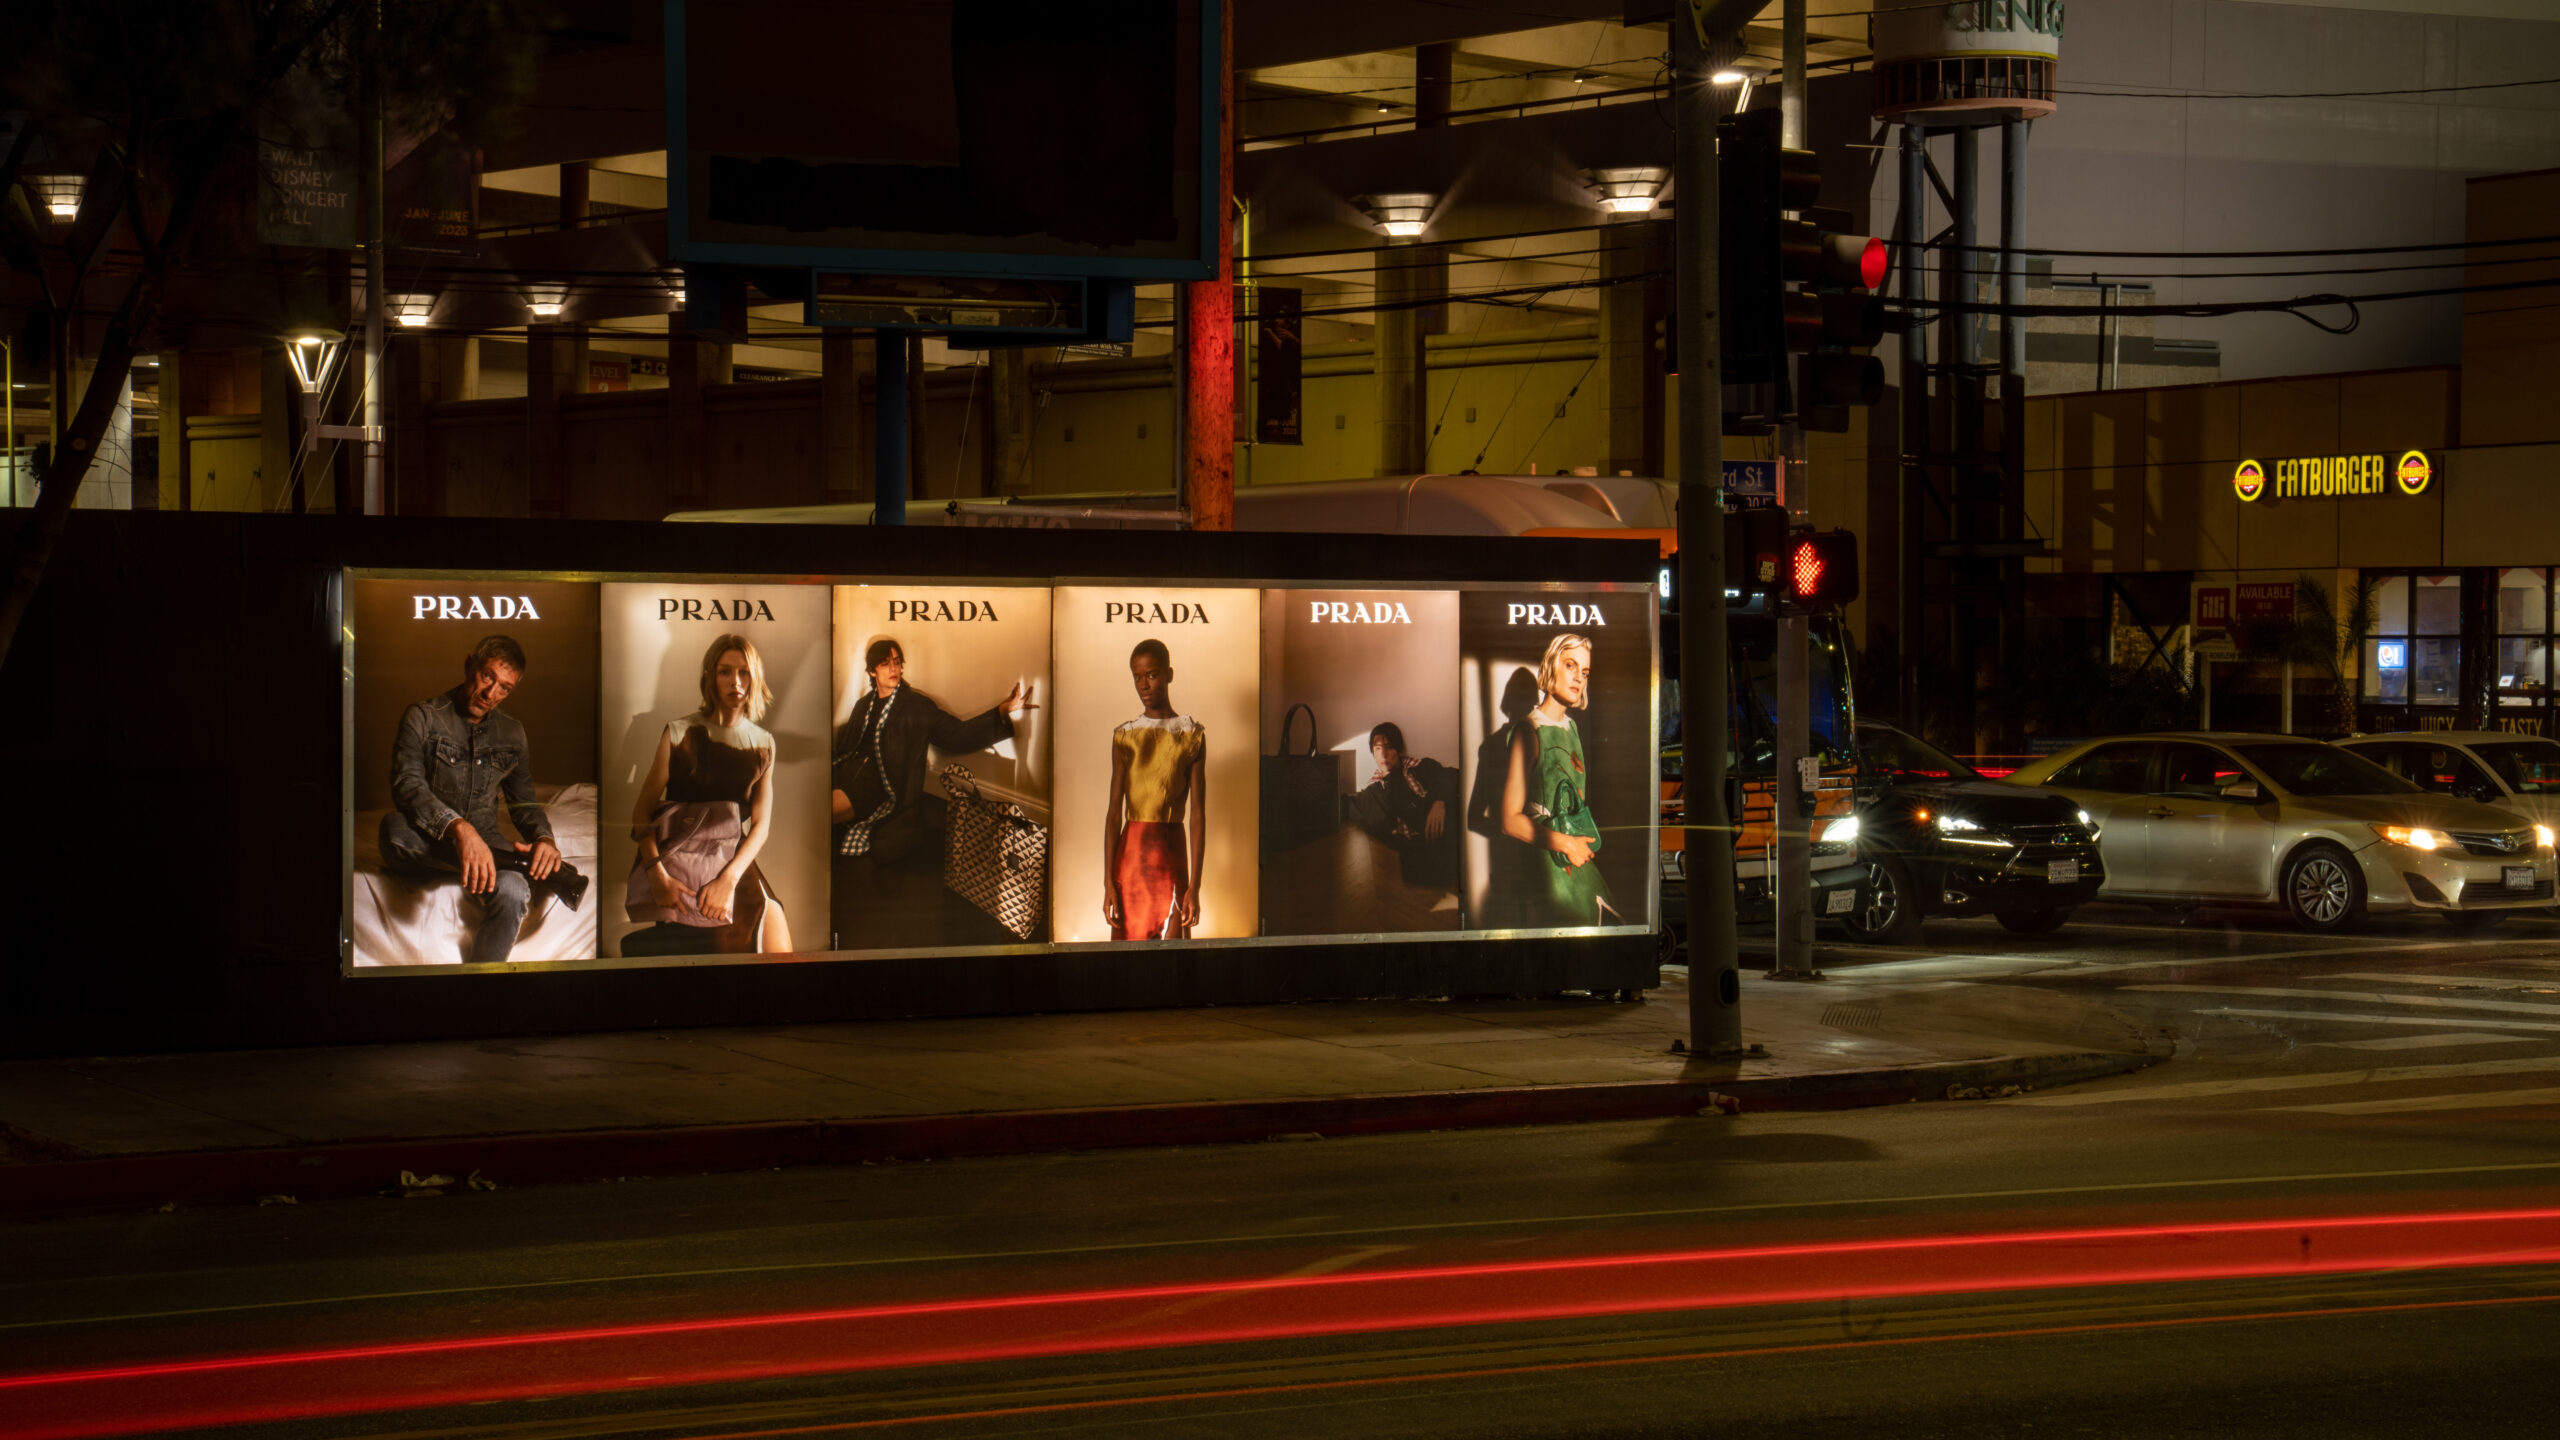 Prada OOH Advertising Illumicades Night Time La Cienega Blvd and W 3rd St